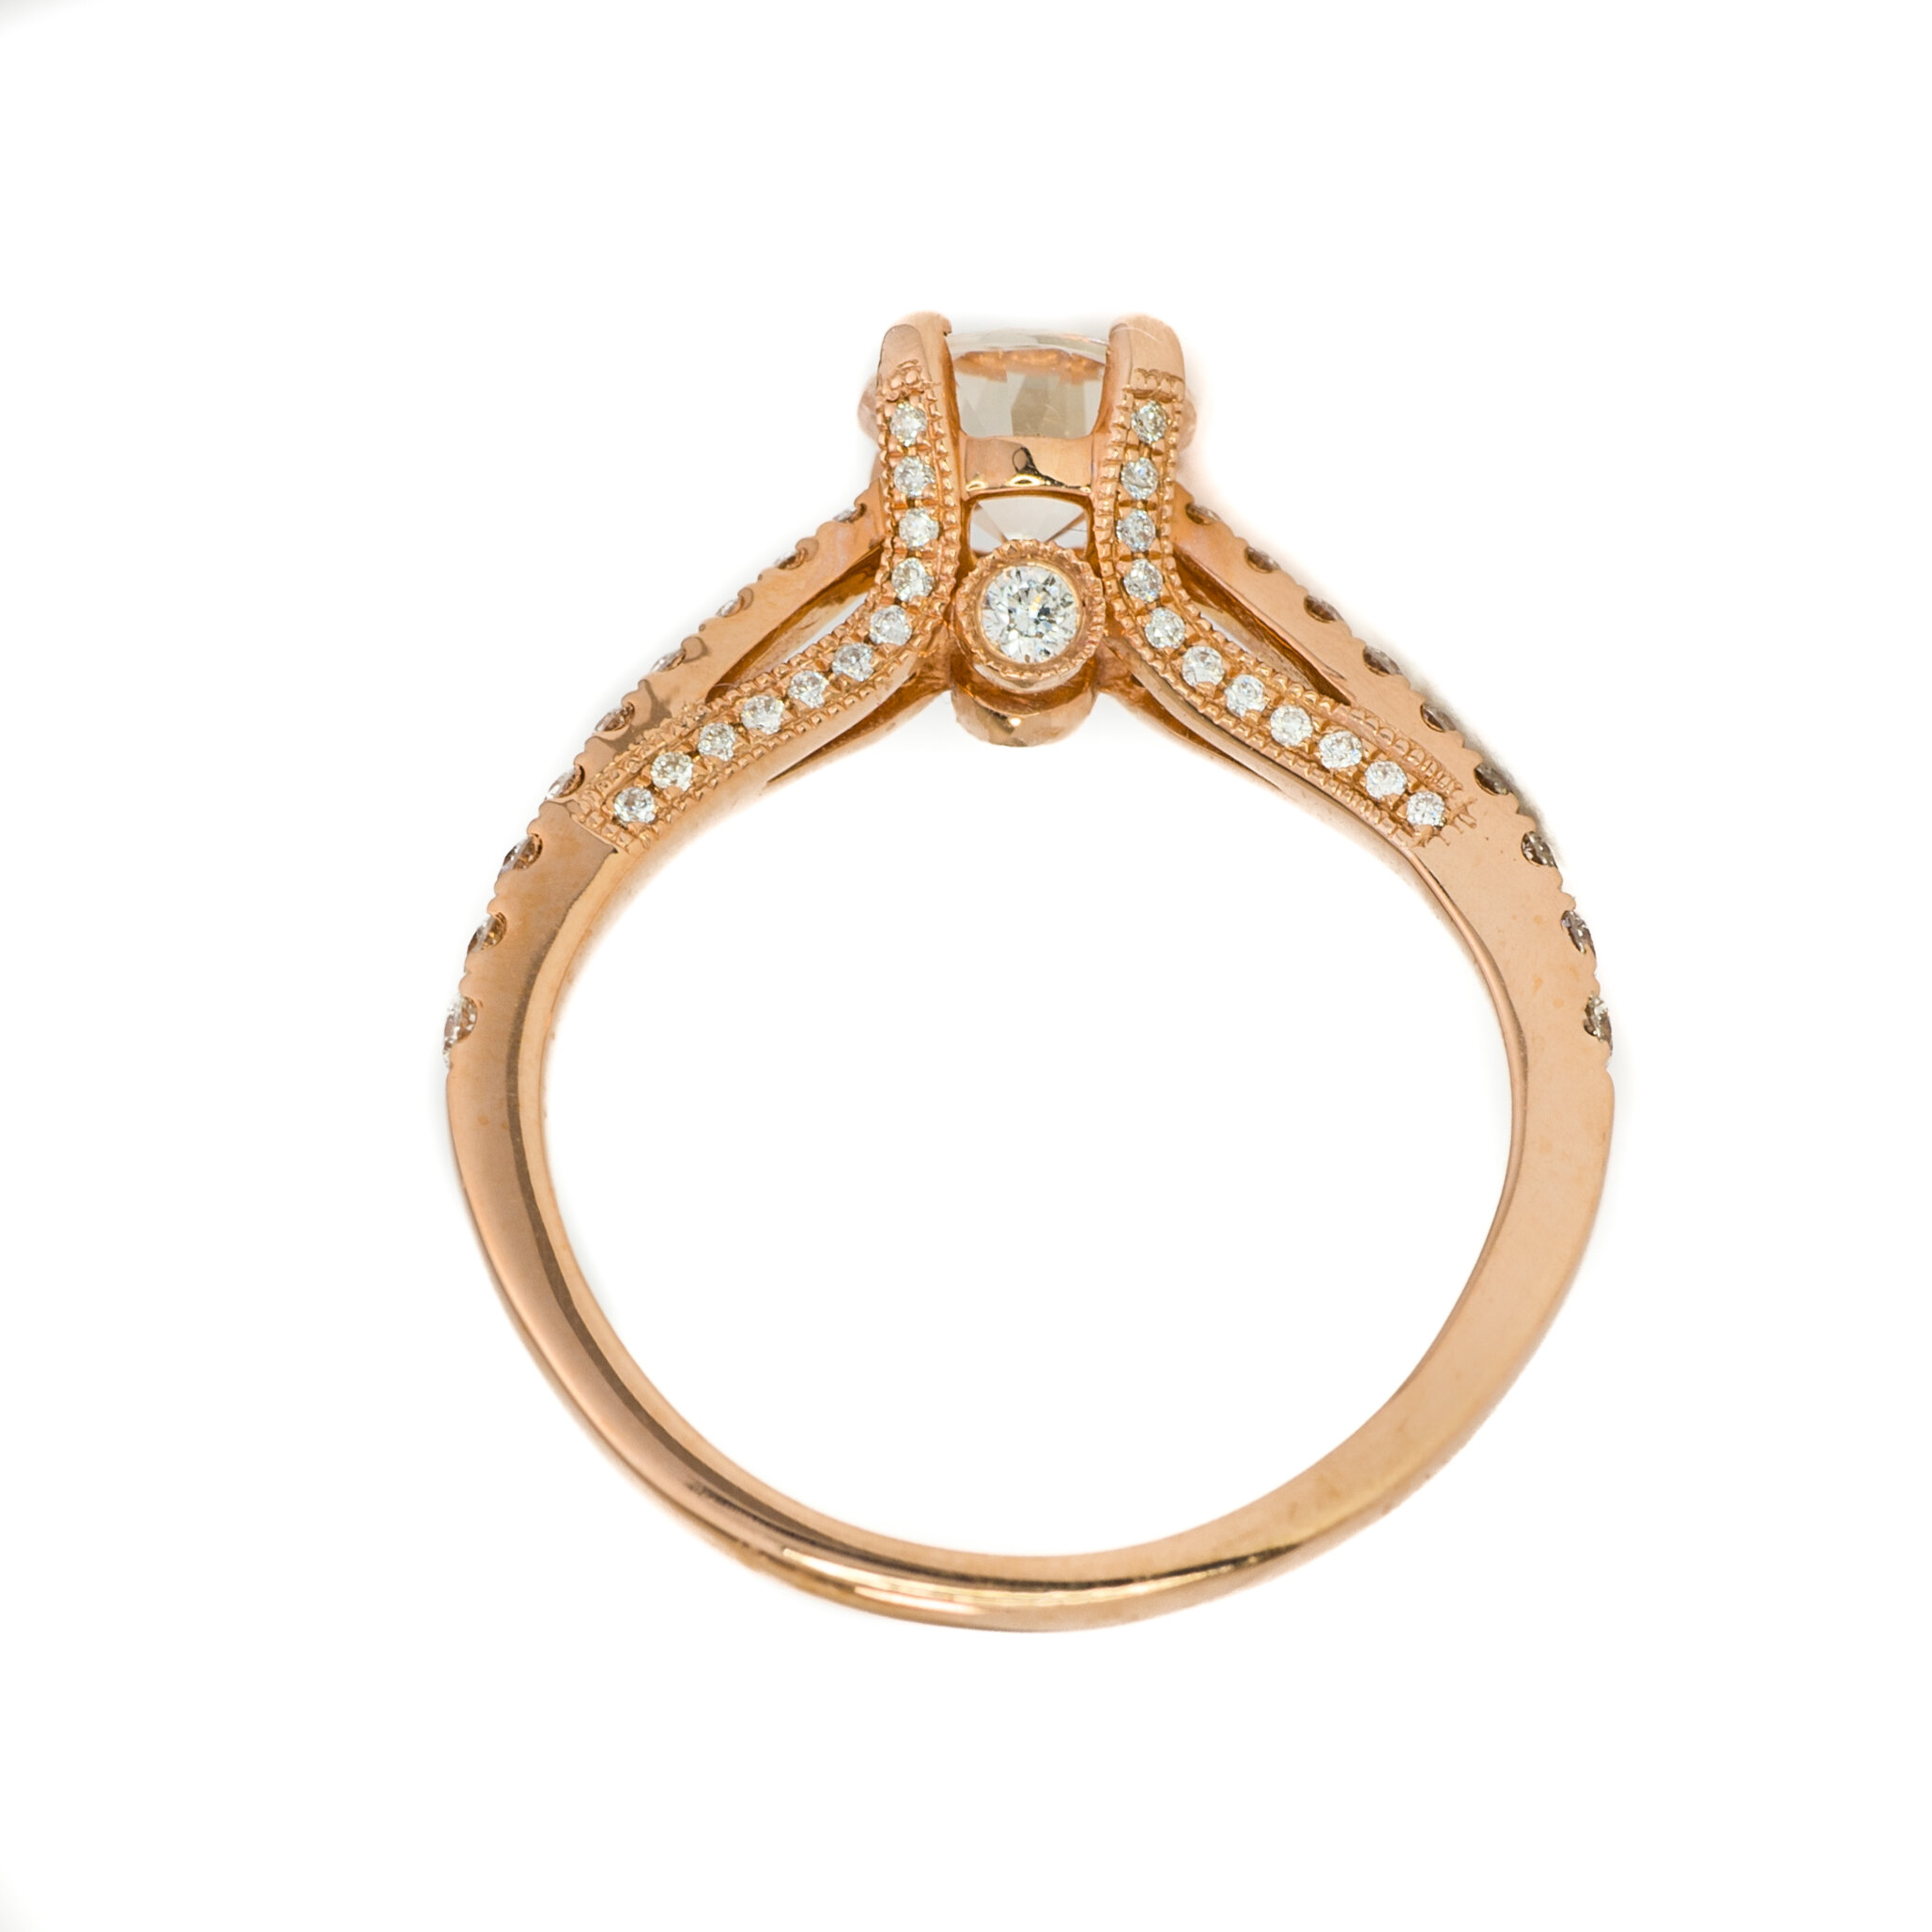 Antique Diamond & Sapphire Bridal Ring Set 14k White Gold 2.87ct - U3081